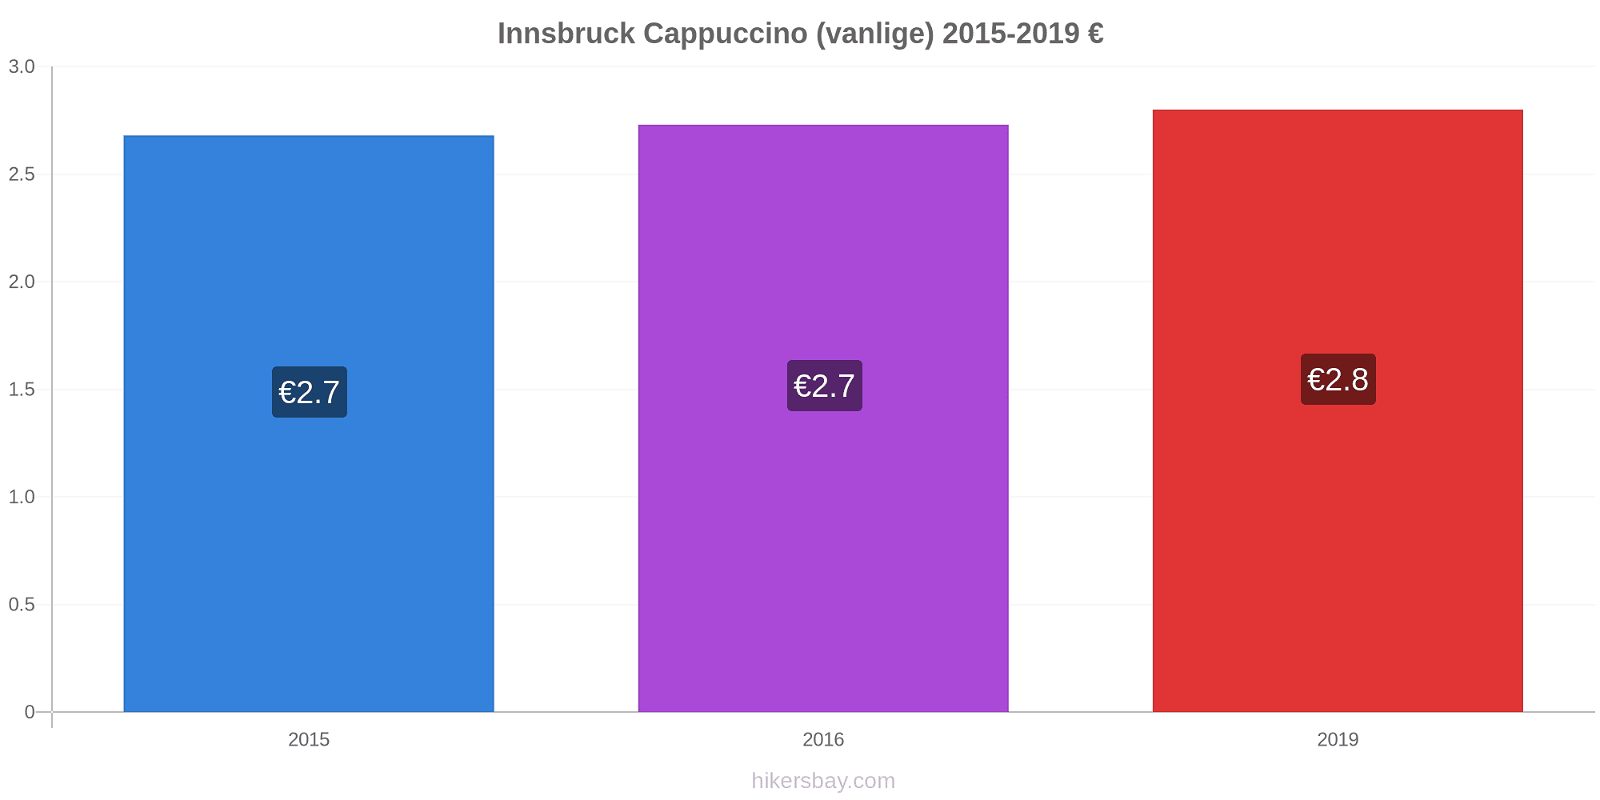 Innsbruck prisendringer Cappuccino (vanlige) hikersbay.com